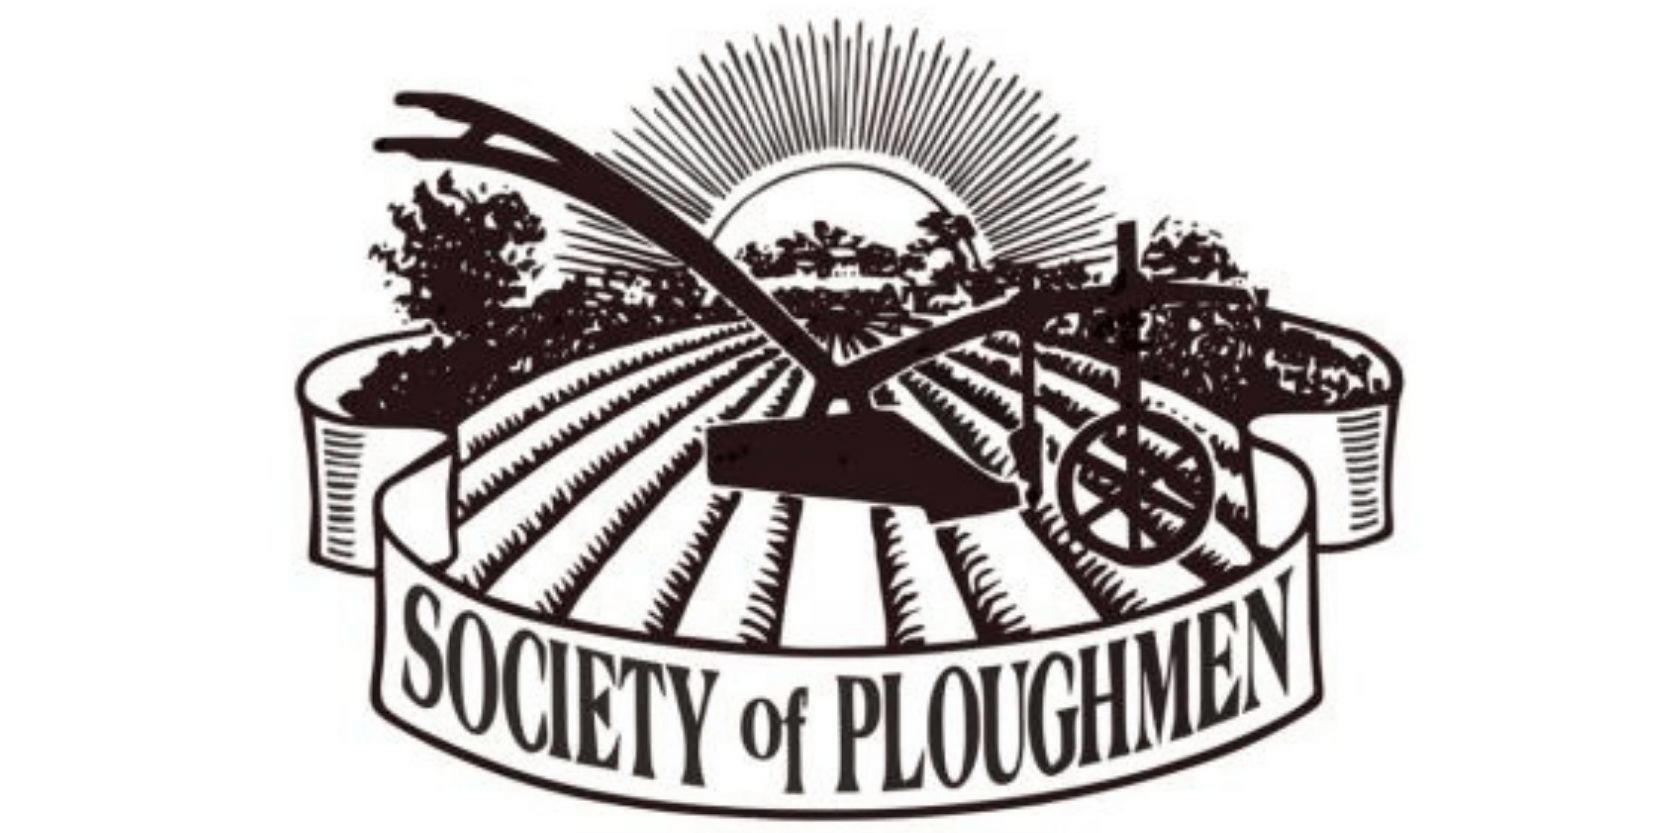 SOCIETY OF PLOUGHMEN